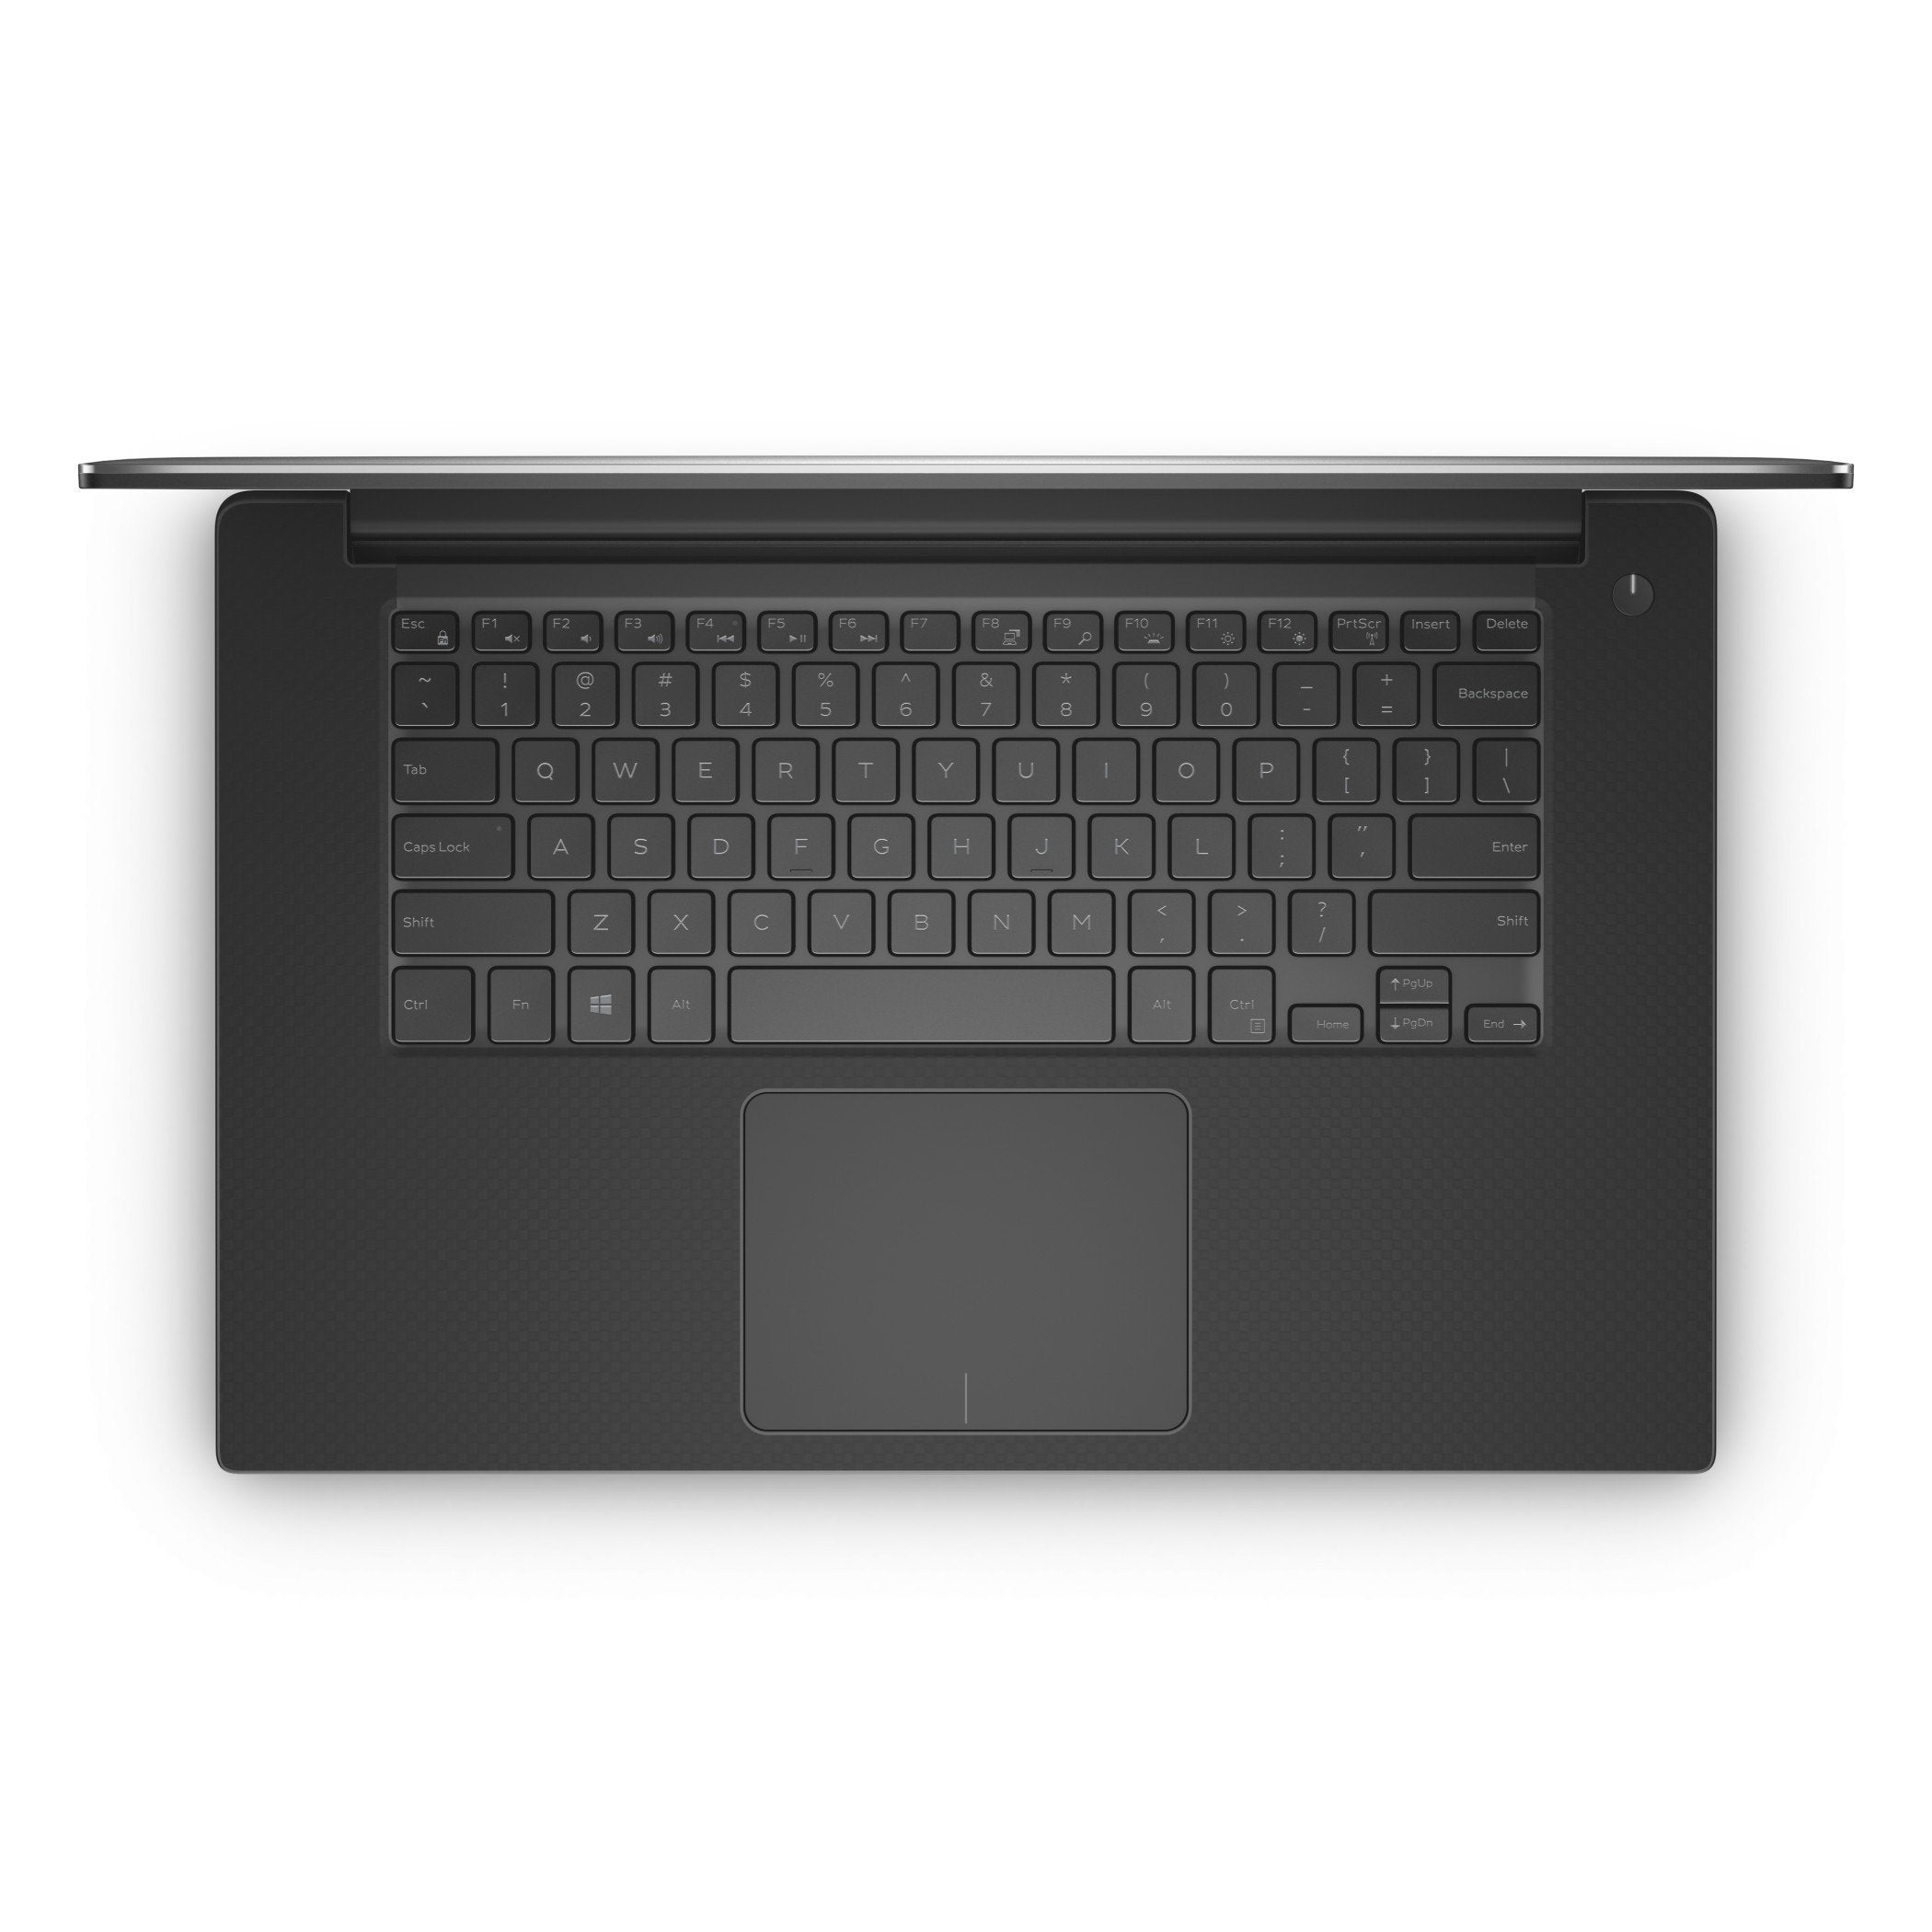 Dell XPS 15 9560 15.6” 4K UHD Touch Laptop – i7-7700HQ (3.8GHz), 16GB DDR4 RAM, 1TB NVMe SSD, NVIDIA GeForce GTX 1050, SD Card Reader, WIFI 5 & BT 5, Windows 10 Pro, Backlit Keyboard